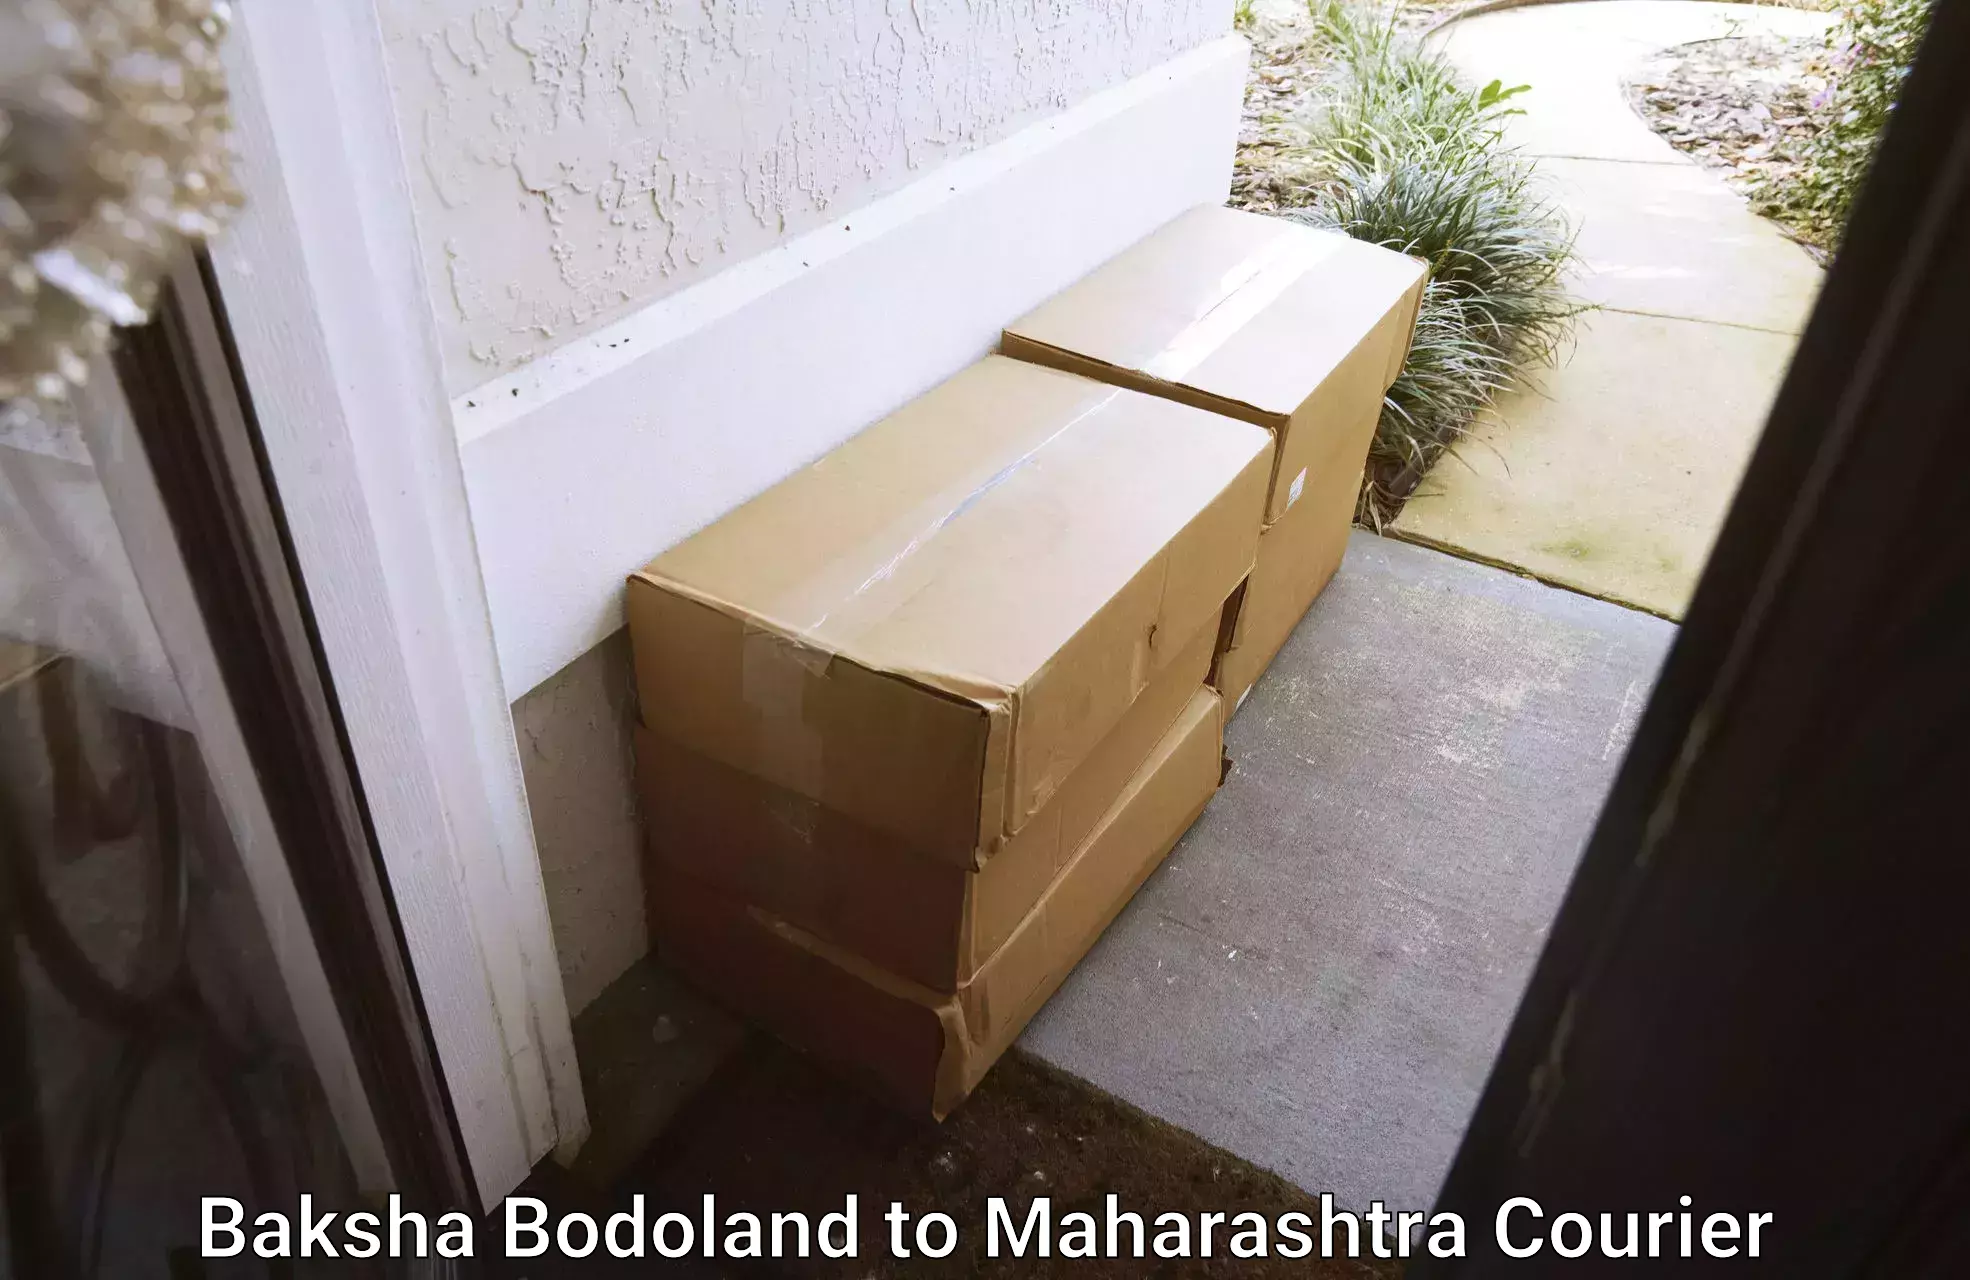 Large package courier Baksha Bodoland to Gangakher